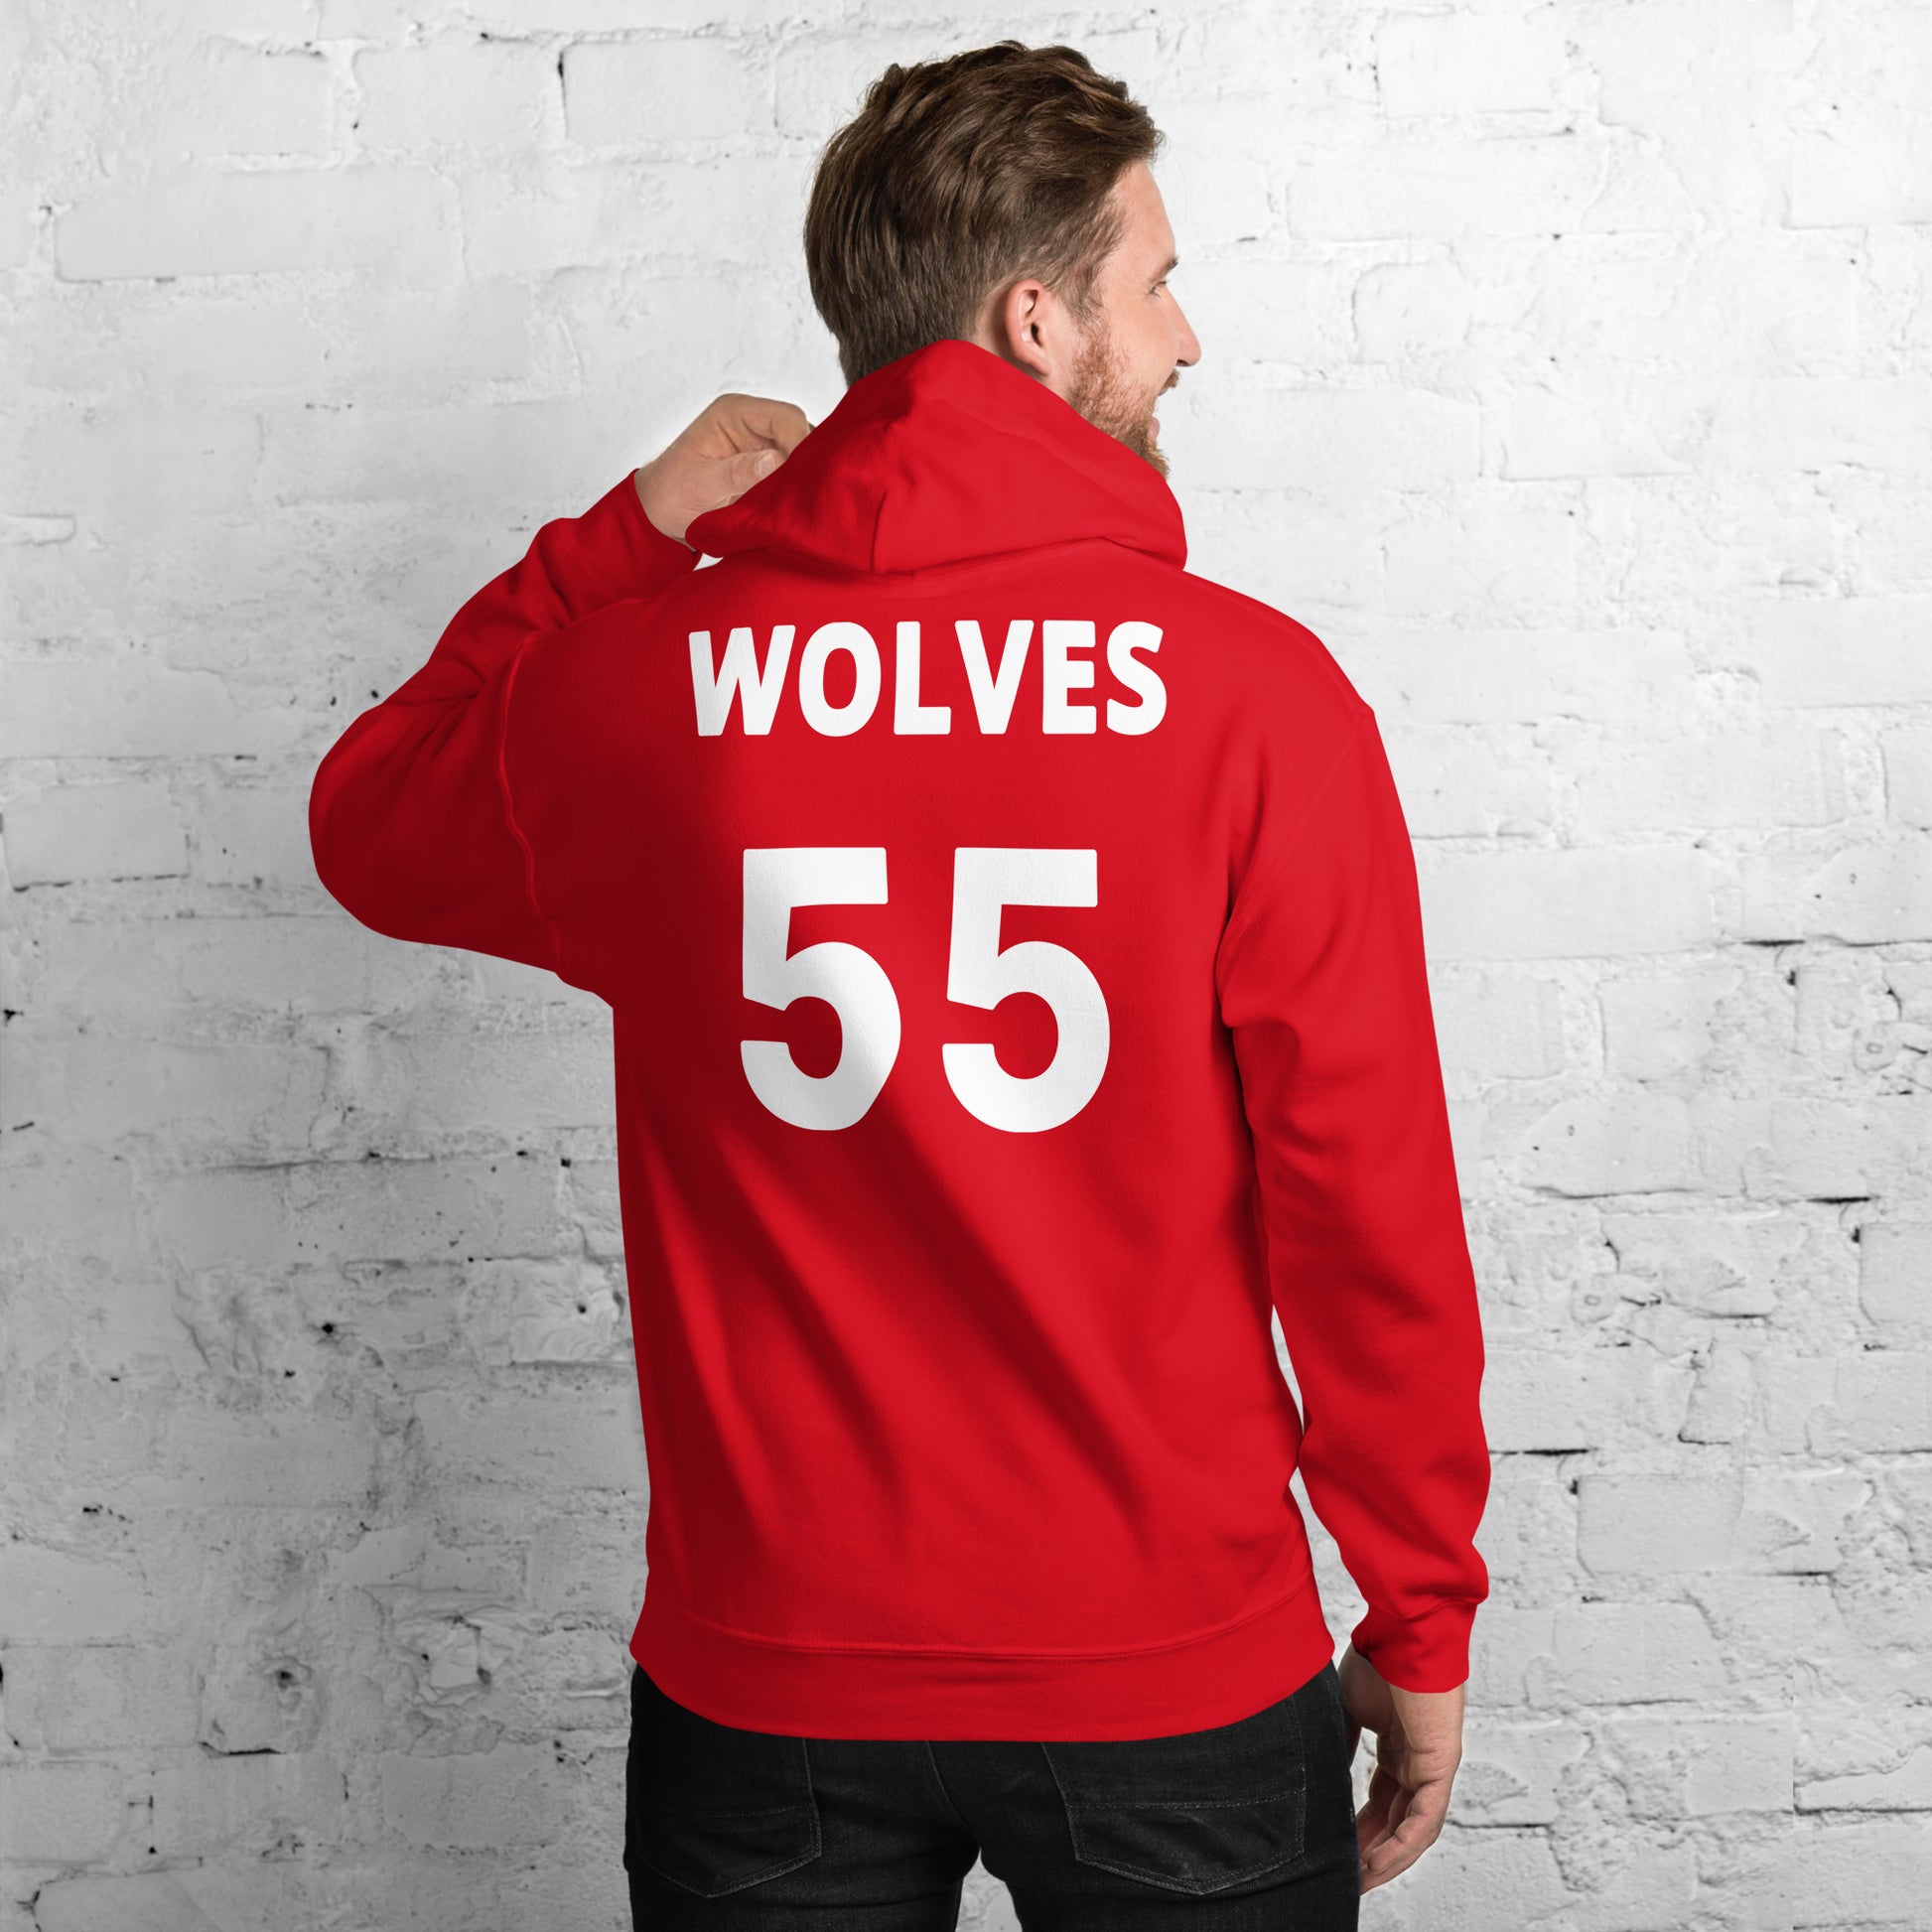 lowa woves - lowa - 55 - hoodies for men - men tshirts - shirts - basketball - sport - fitness